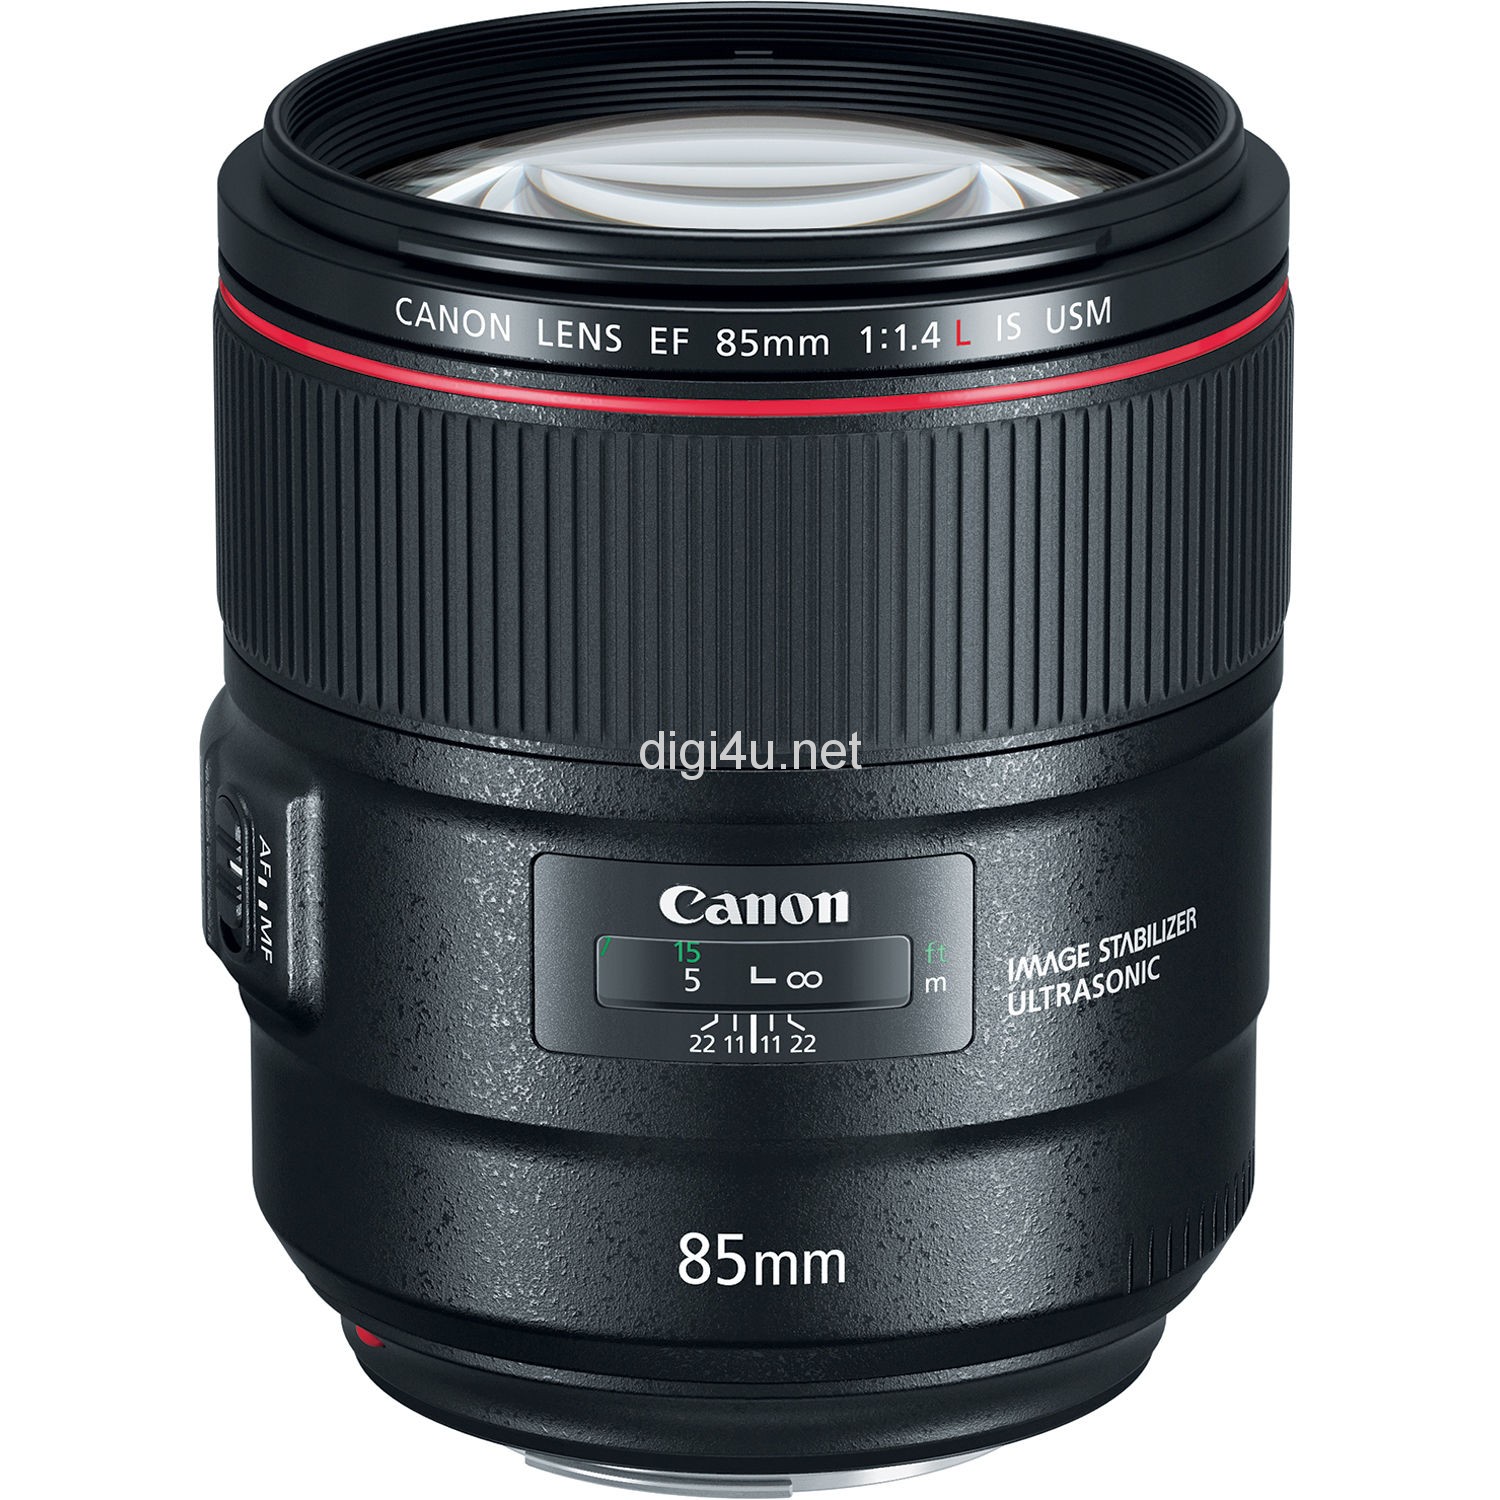 Canon lens 85mm f/1.4L IS USM giá cả hợp lý